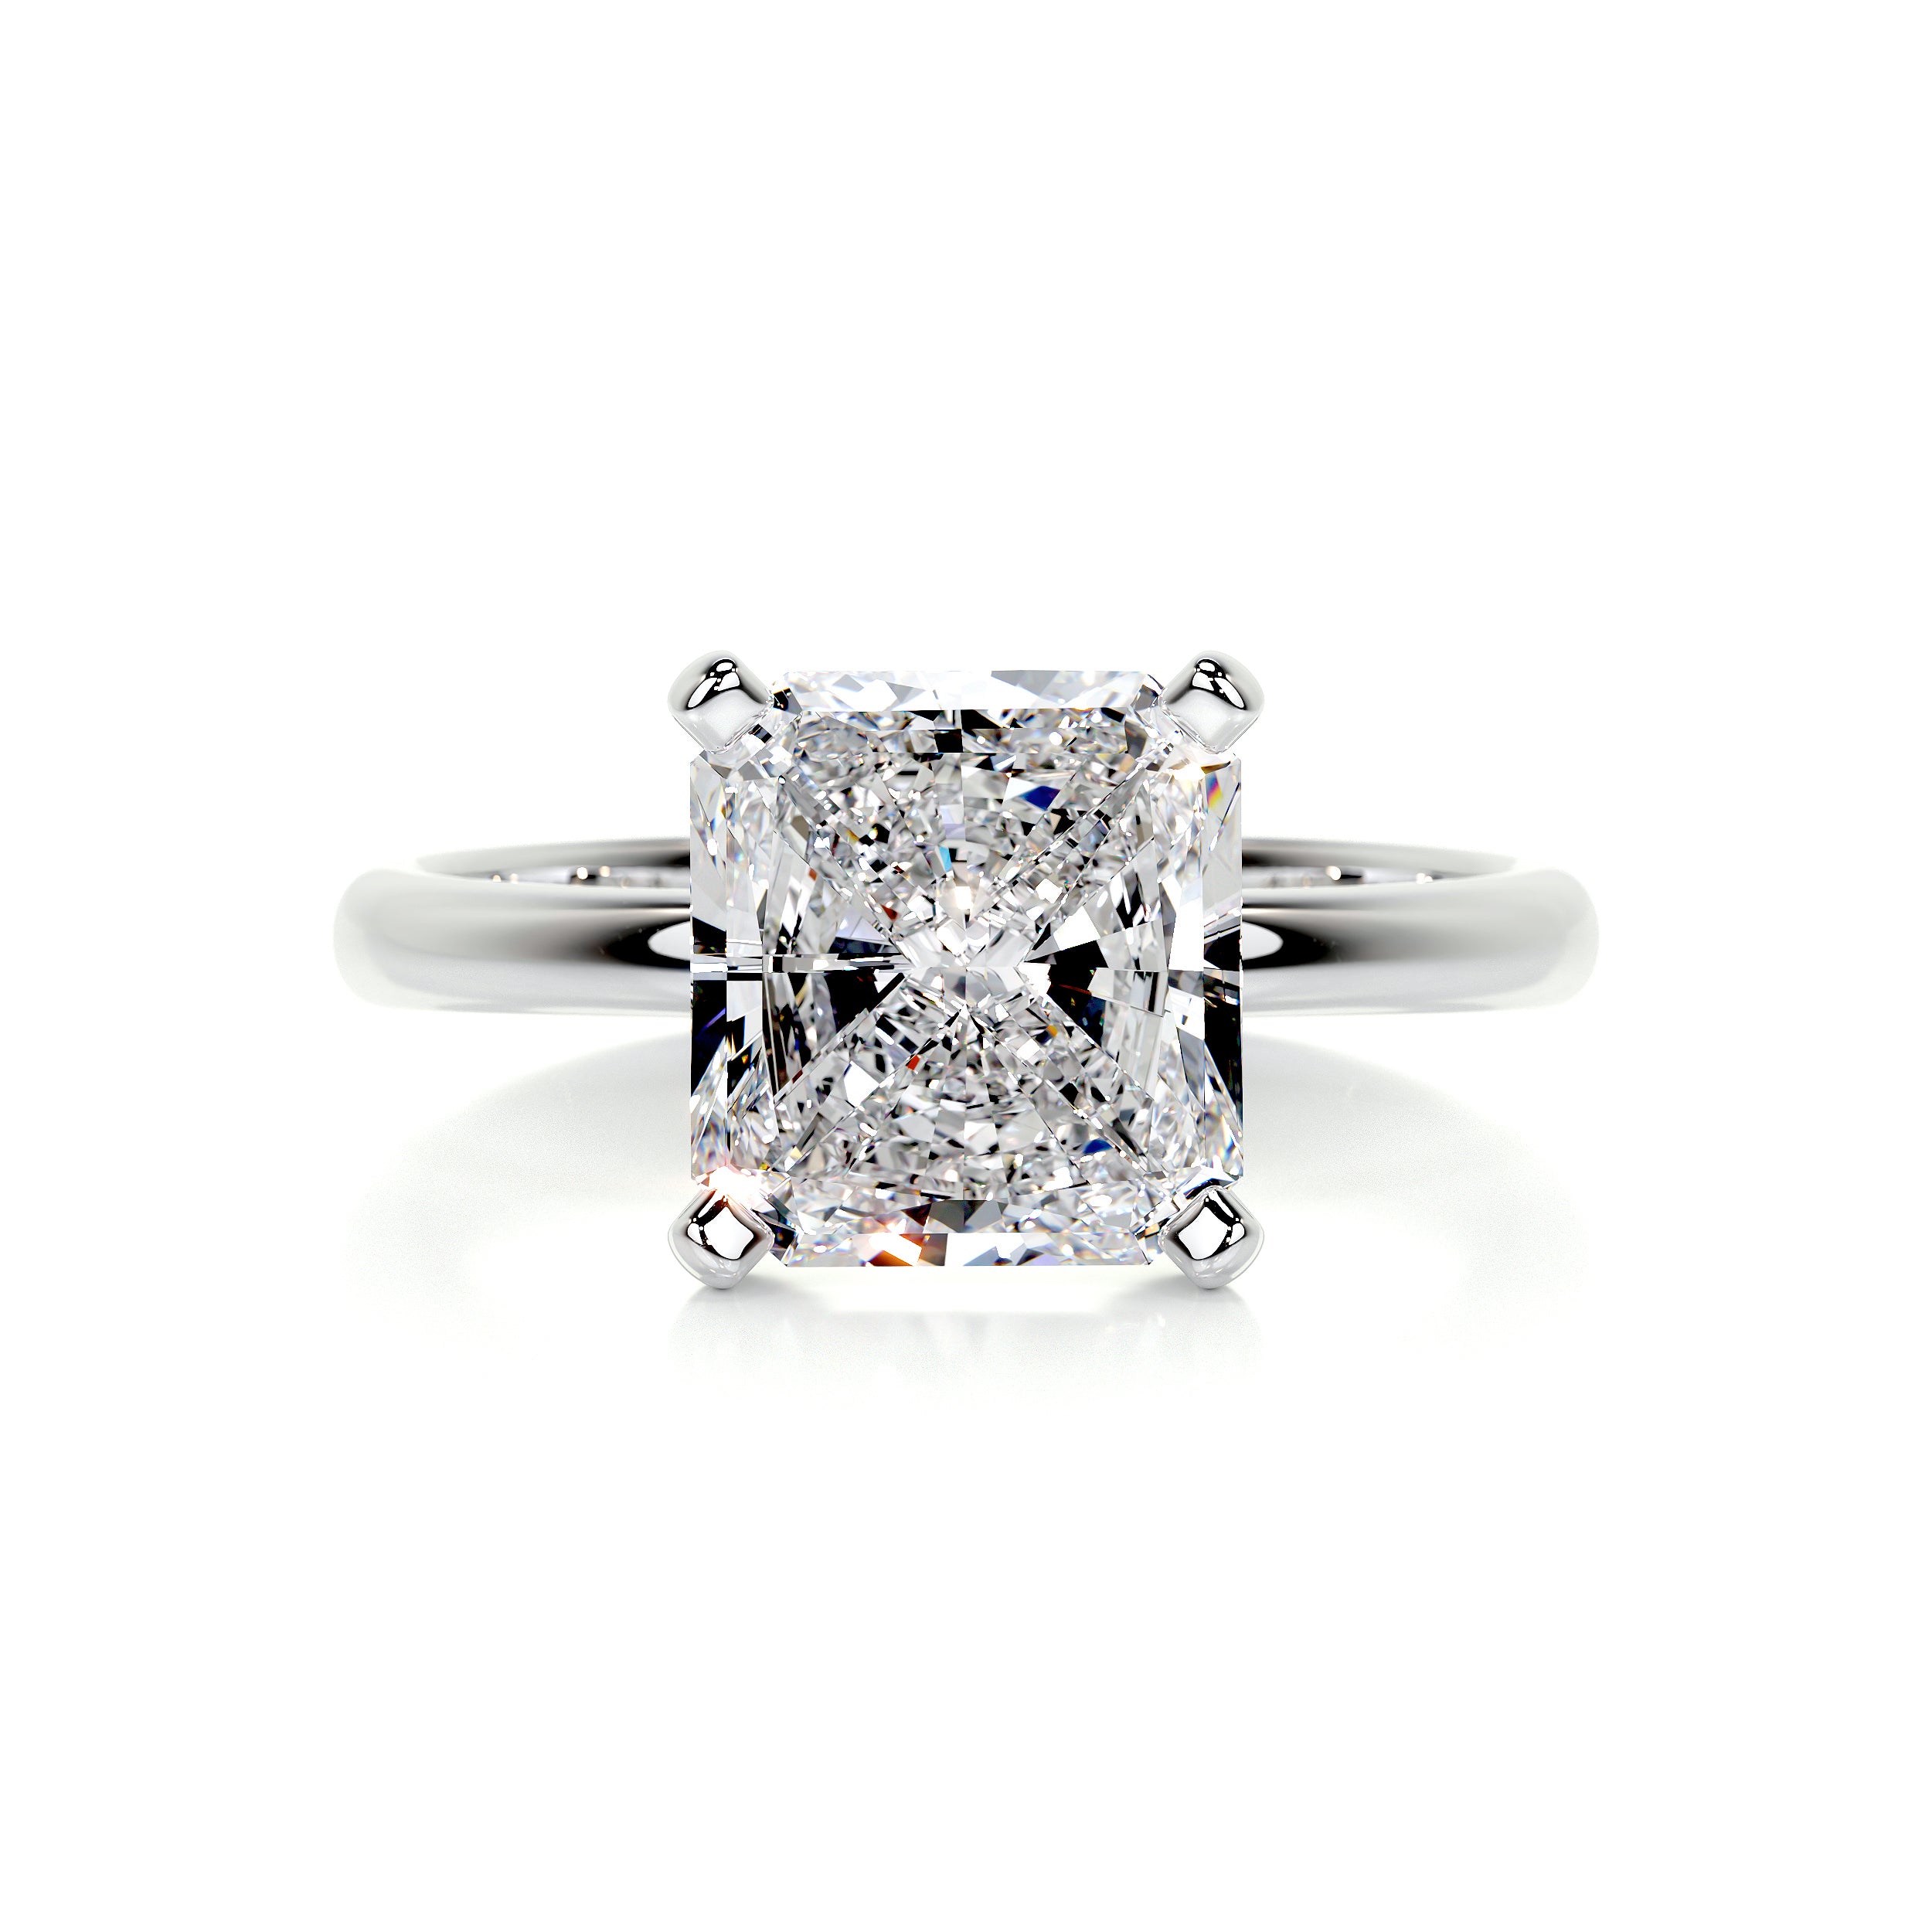 Julianna Diamond Engagement Ring   (3 Carat) -14K White Gold